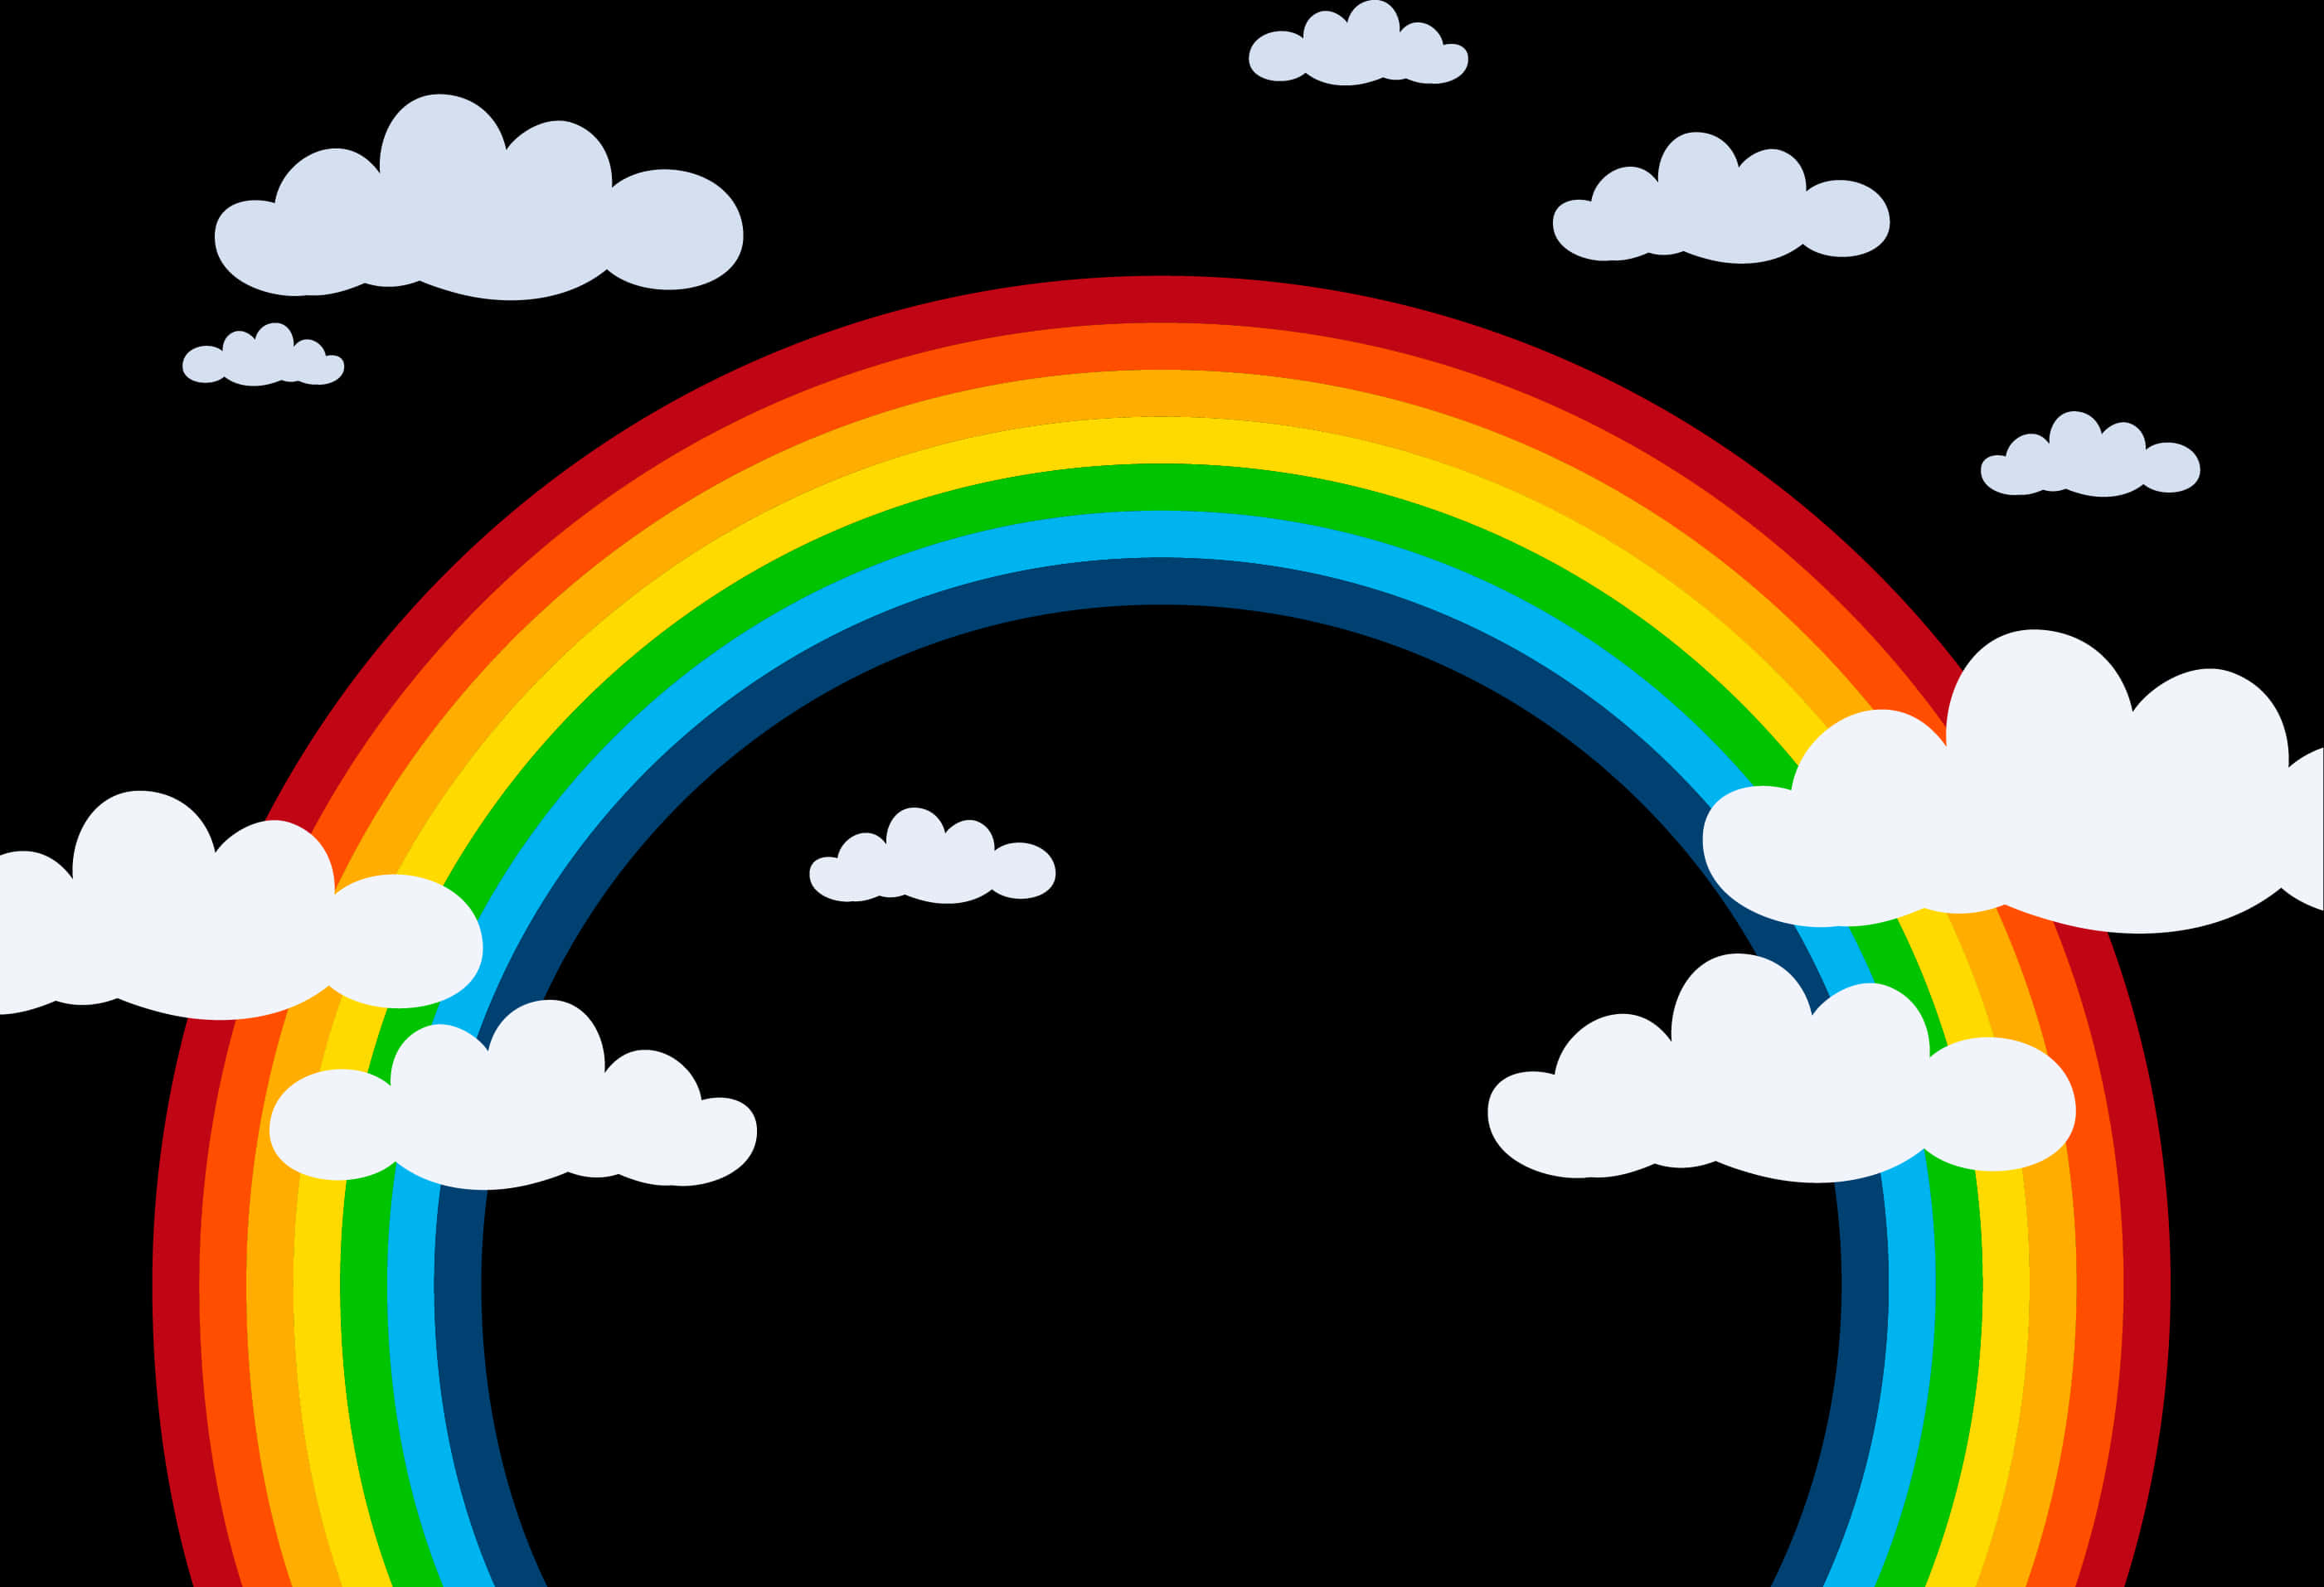 Colorful Rainbowand Clouds Illustration